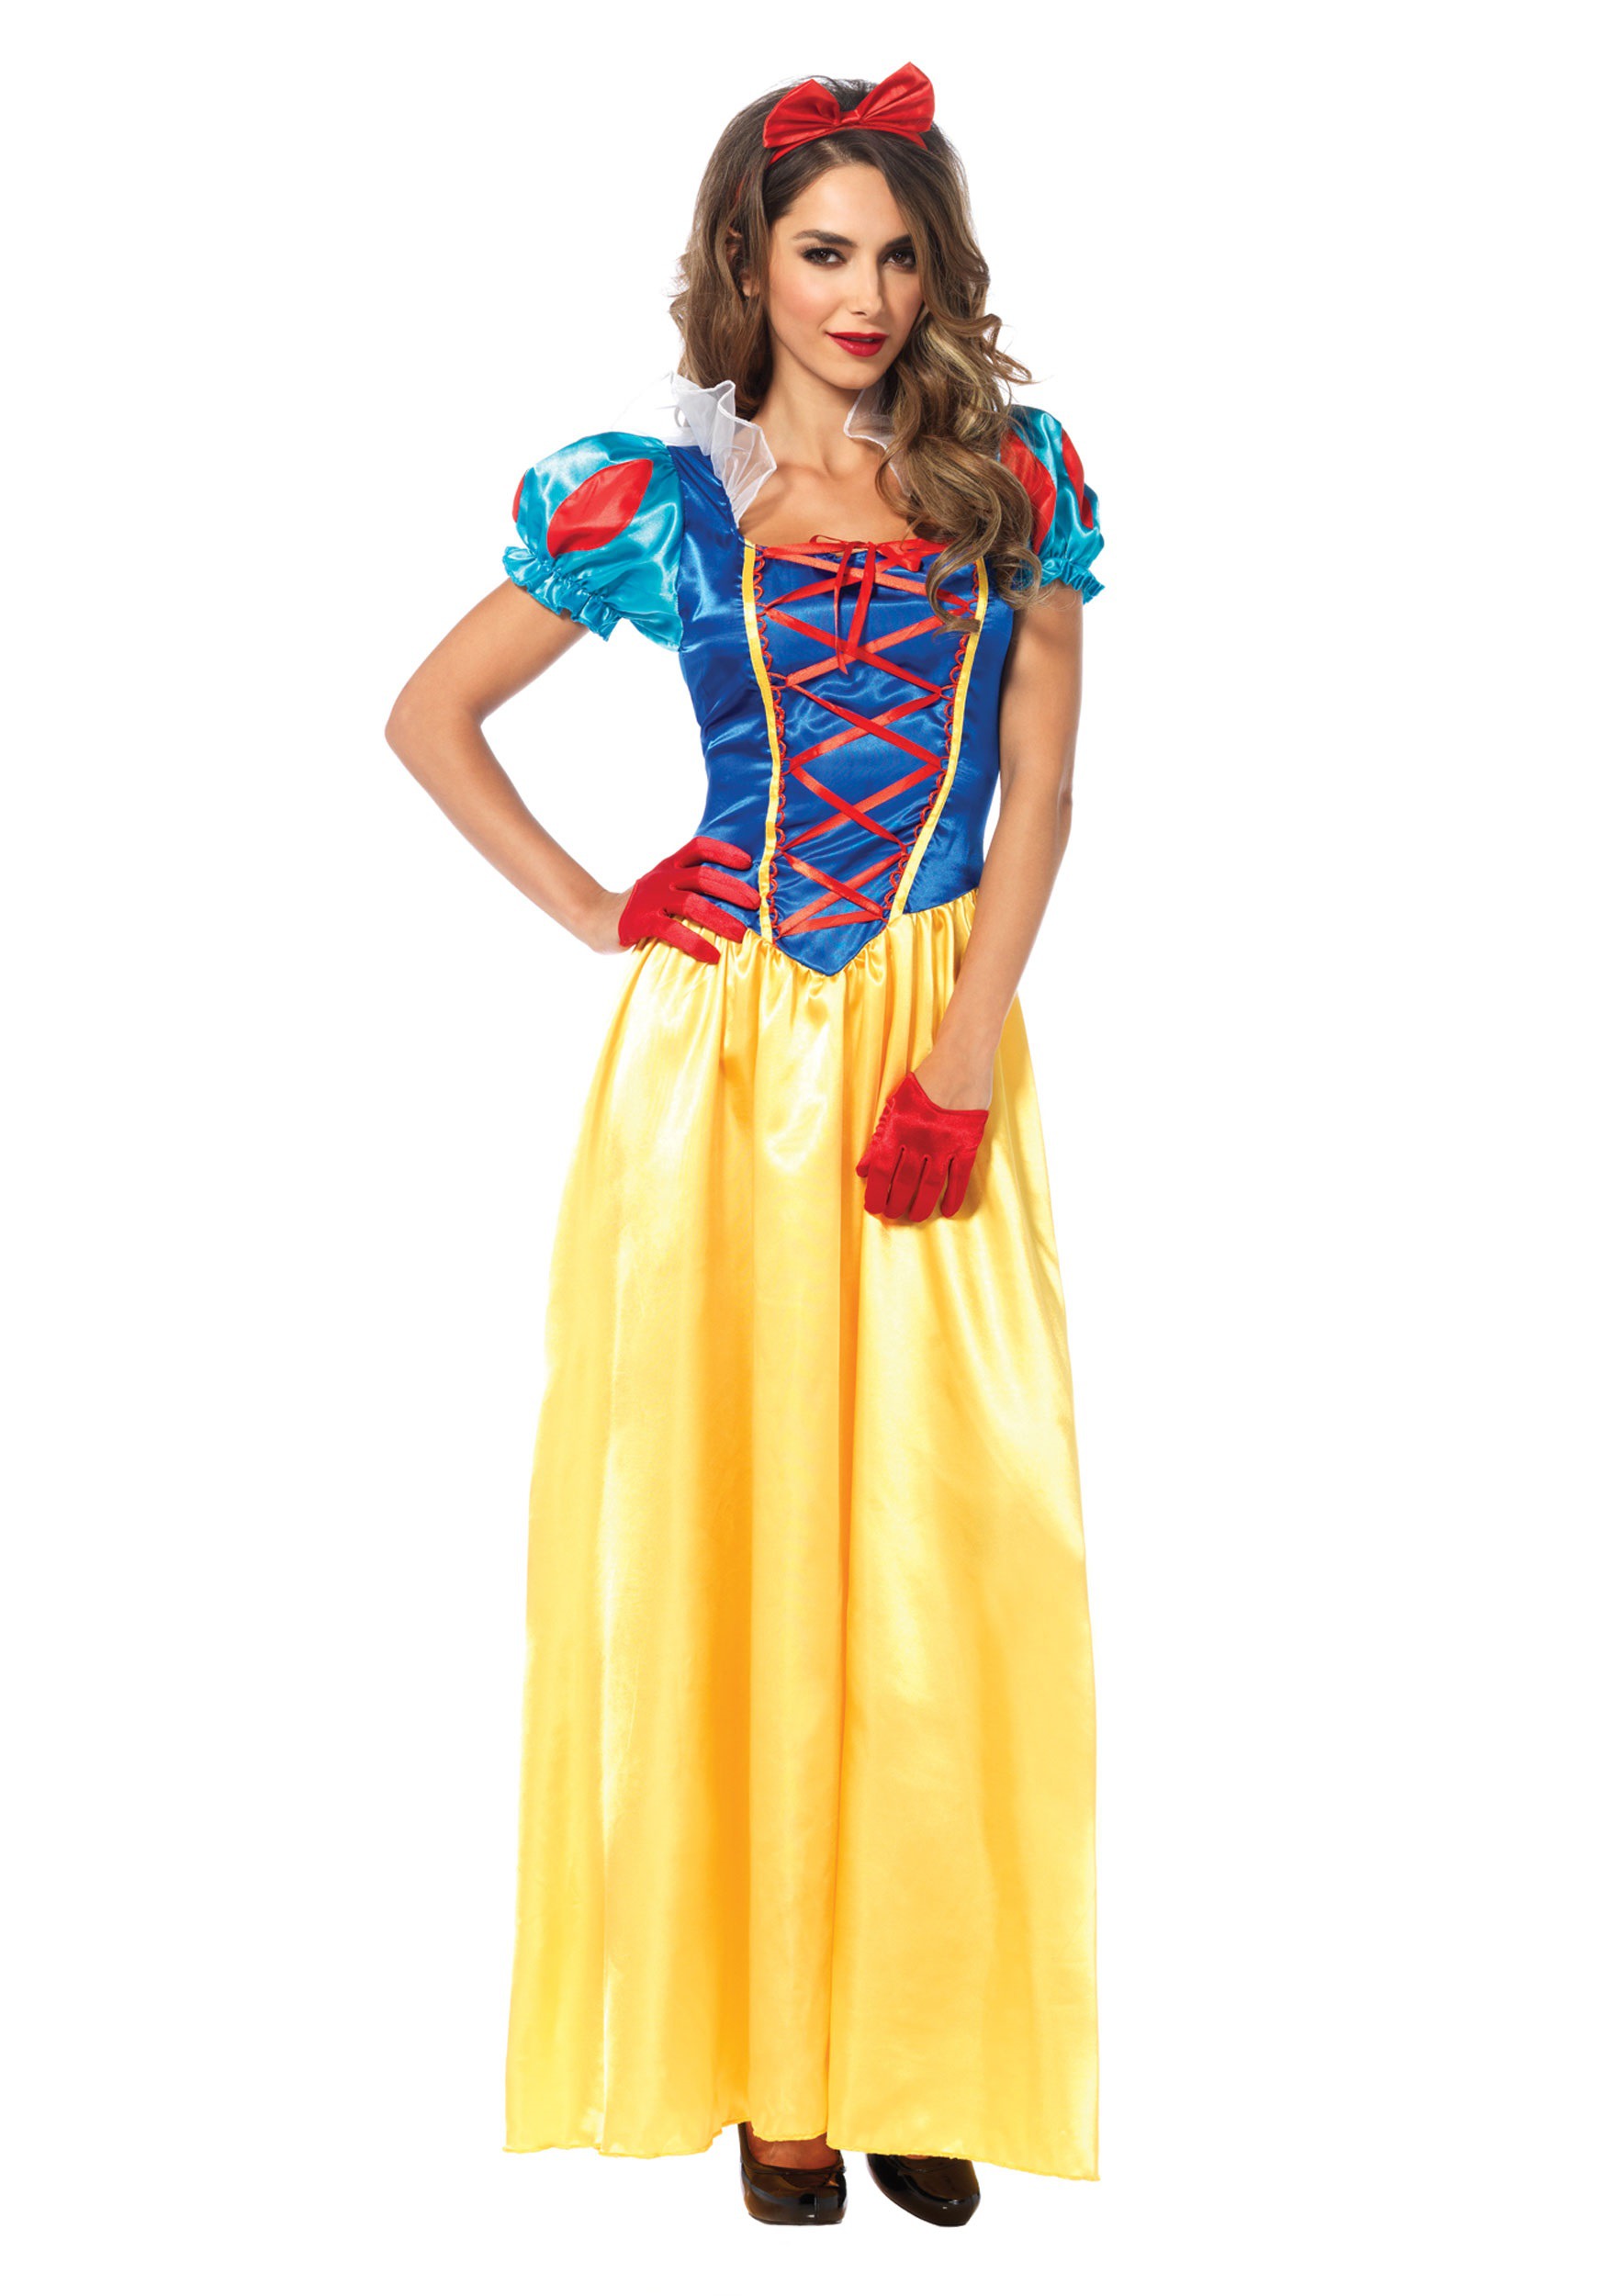 Snow White Princess Costume Dress Petticoat Headband For Adult Halloween Cosplay 